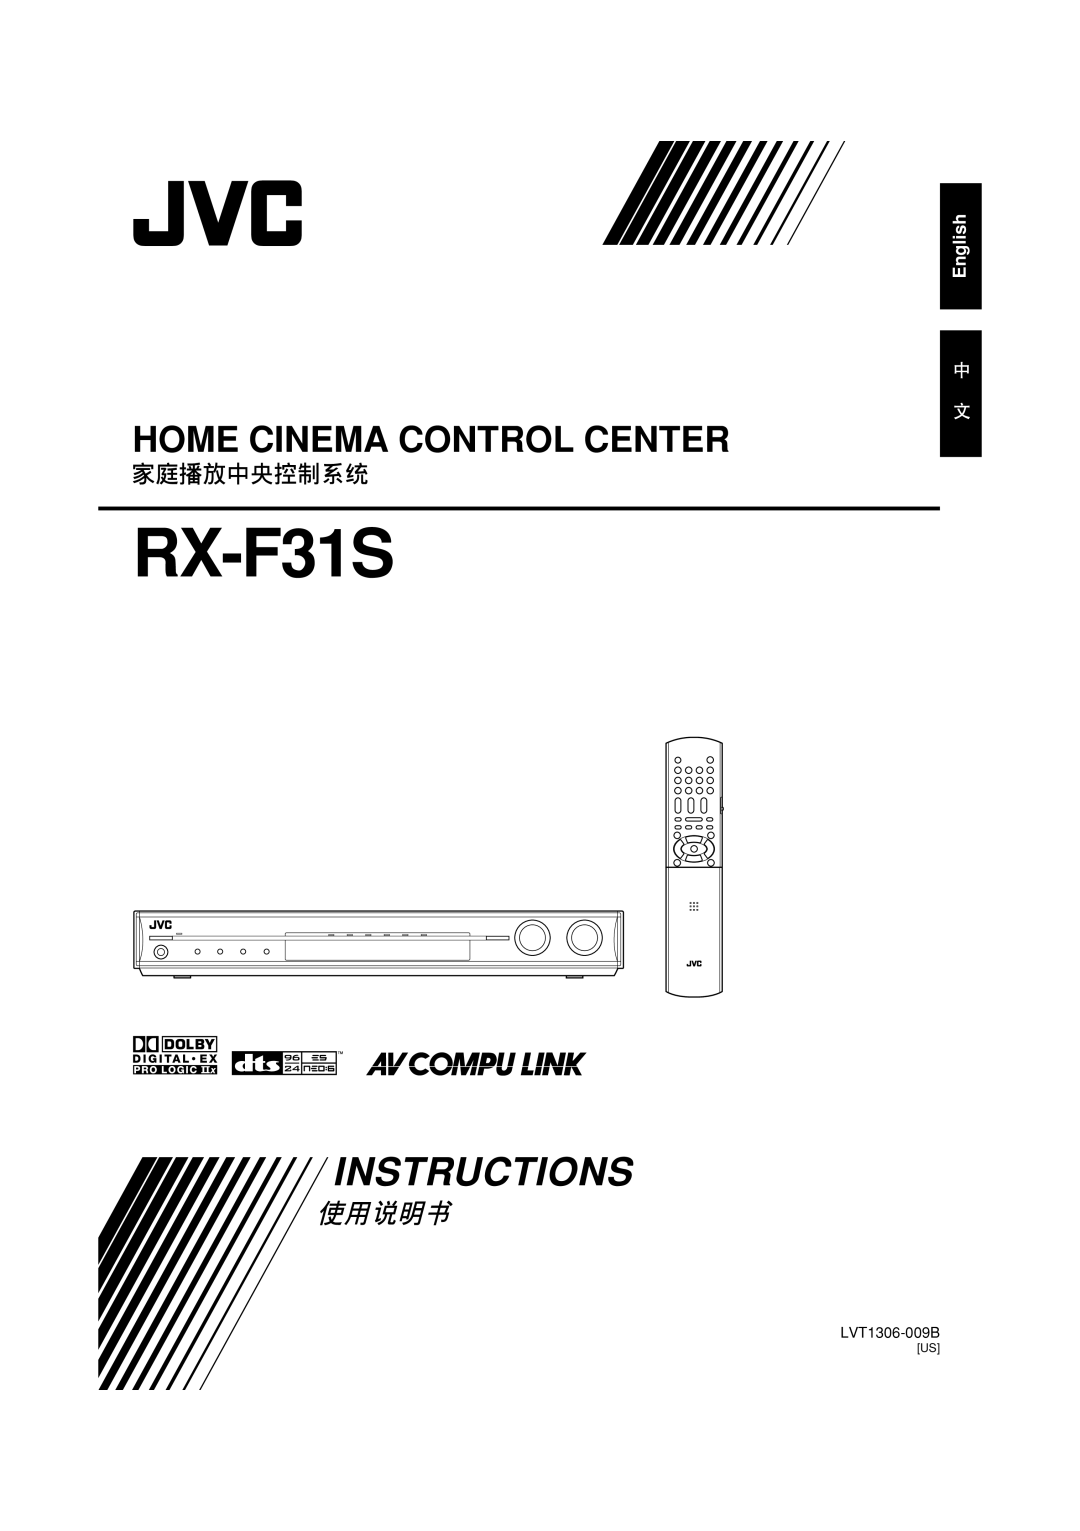 JVC RX-F31S manual Instructions, Home Cinema Control Center, English 